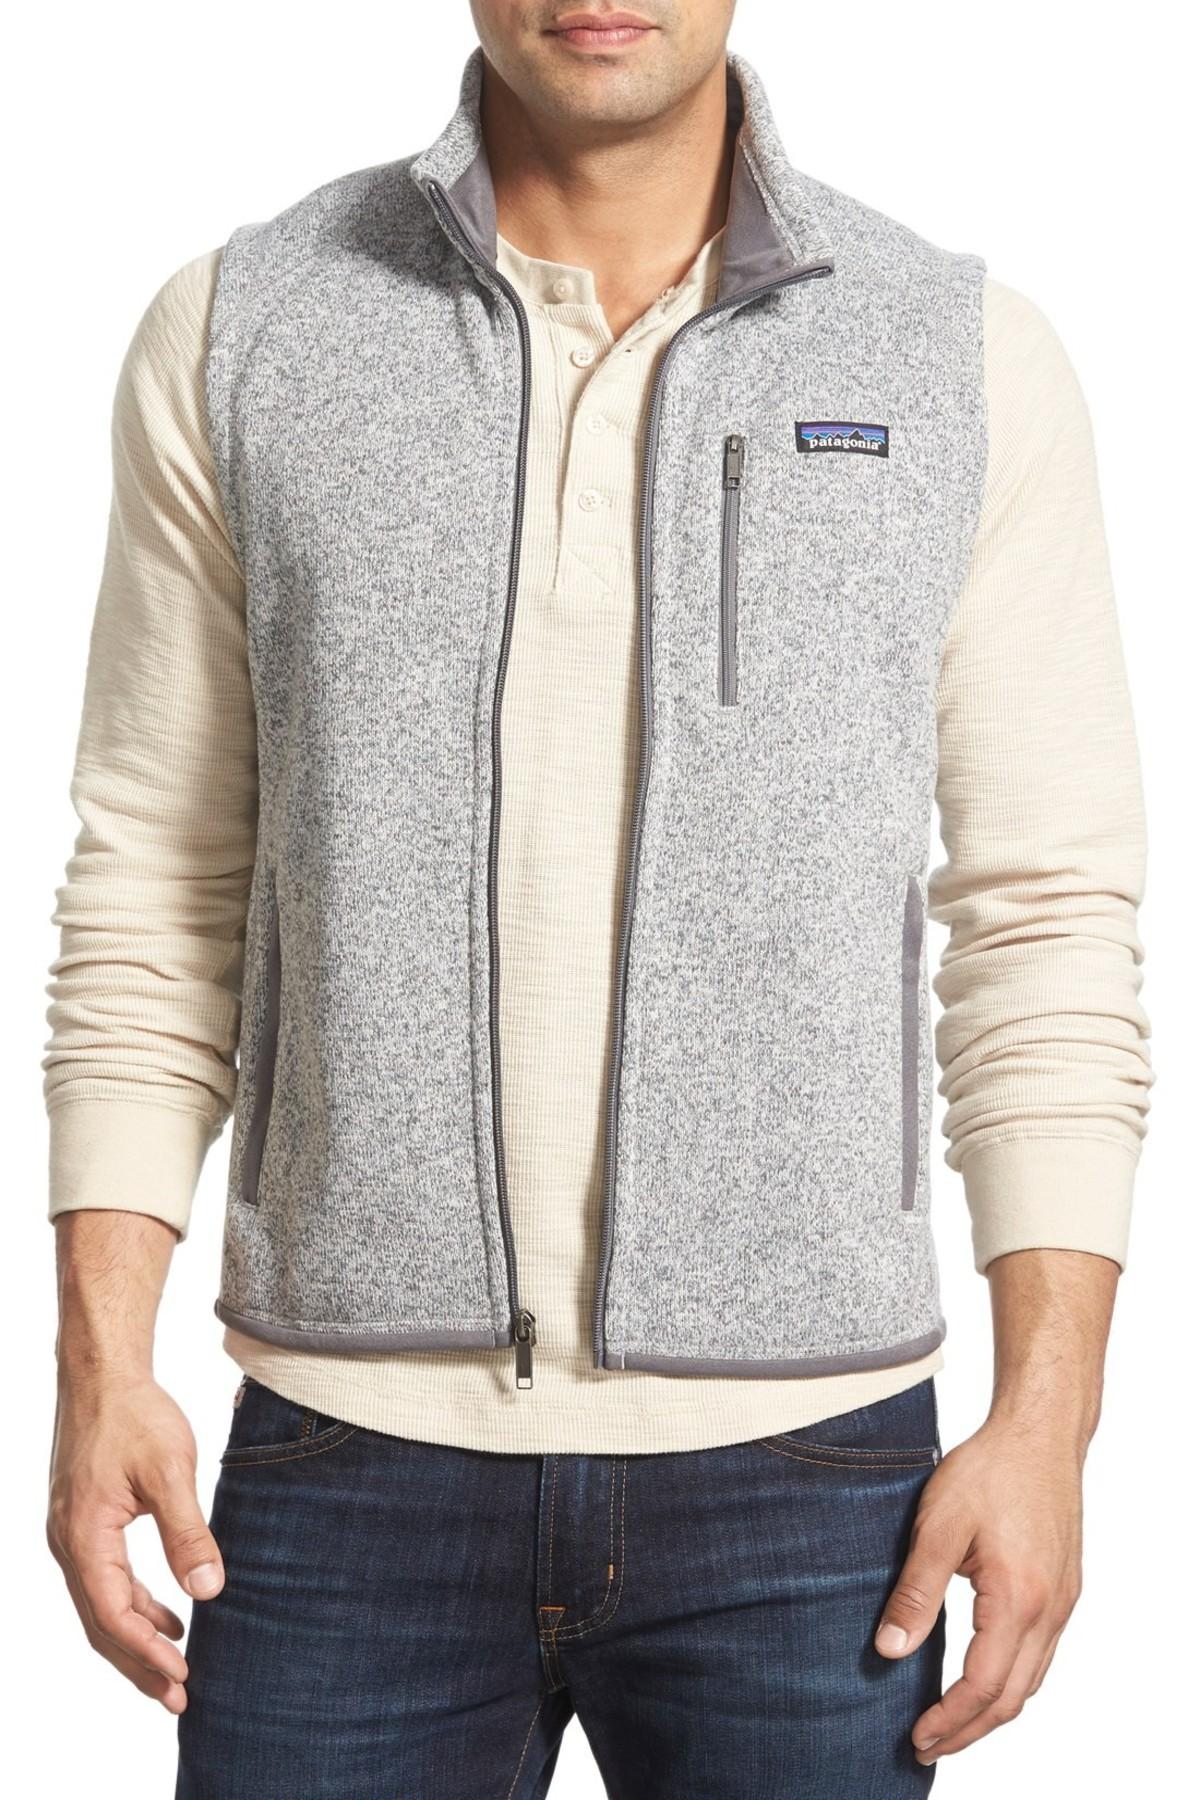 Patagonia Better Sweater Fleece Vest in Stonewash (Gray) for Men - Lyst